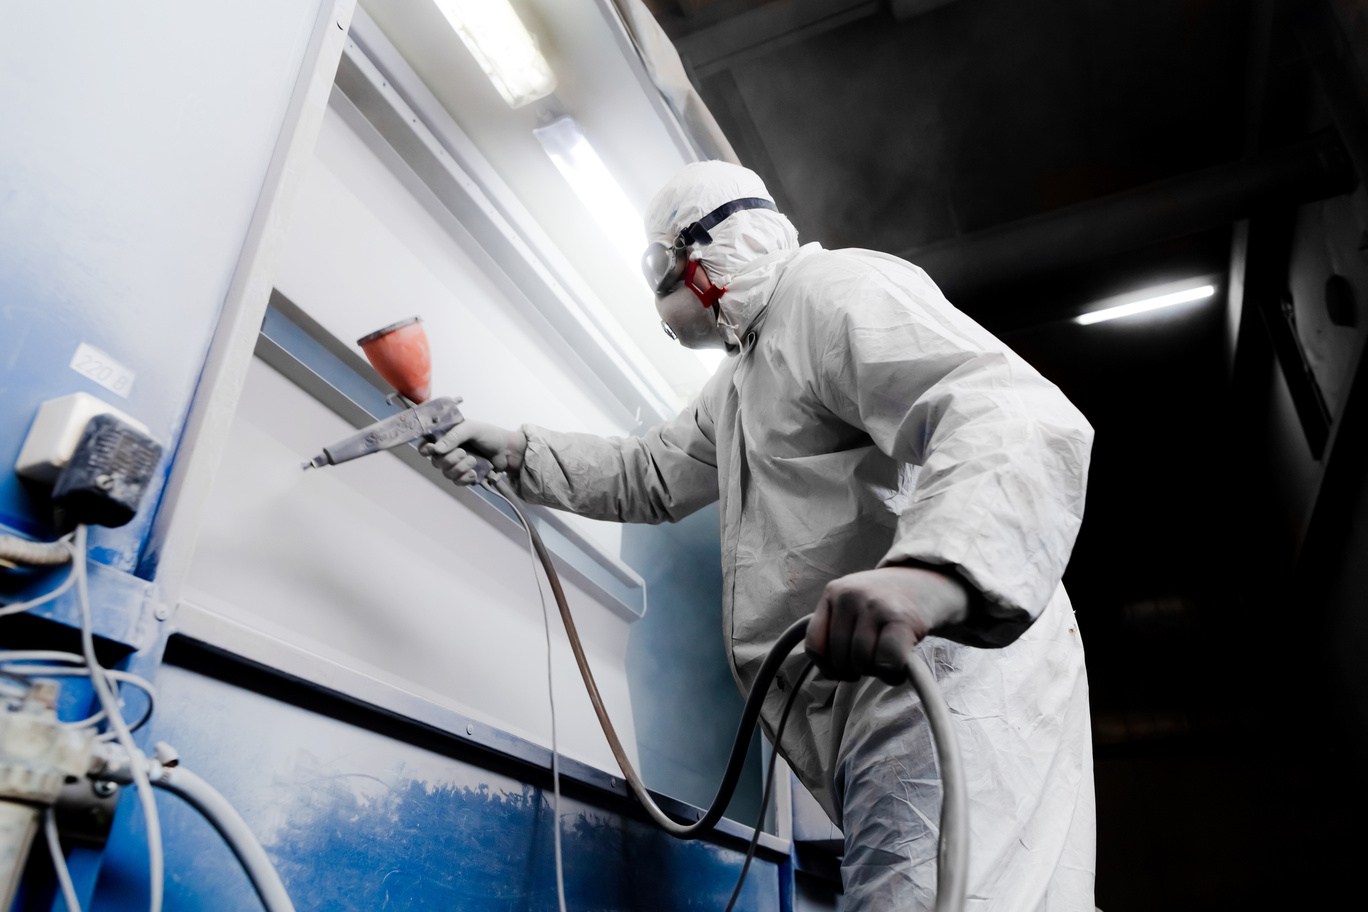 electrostatic painting expert paints metal impact door with a spray gun